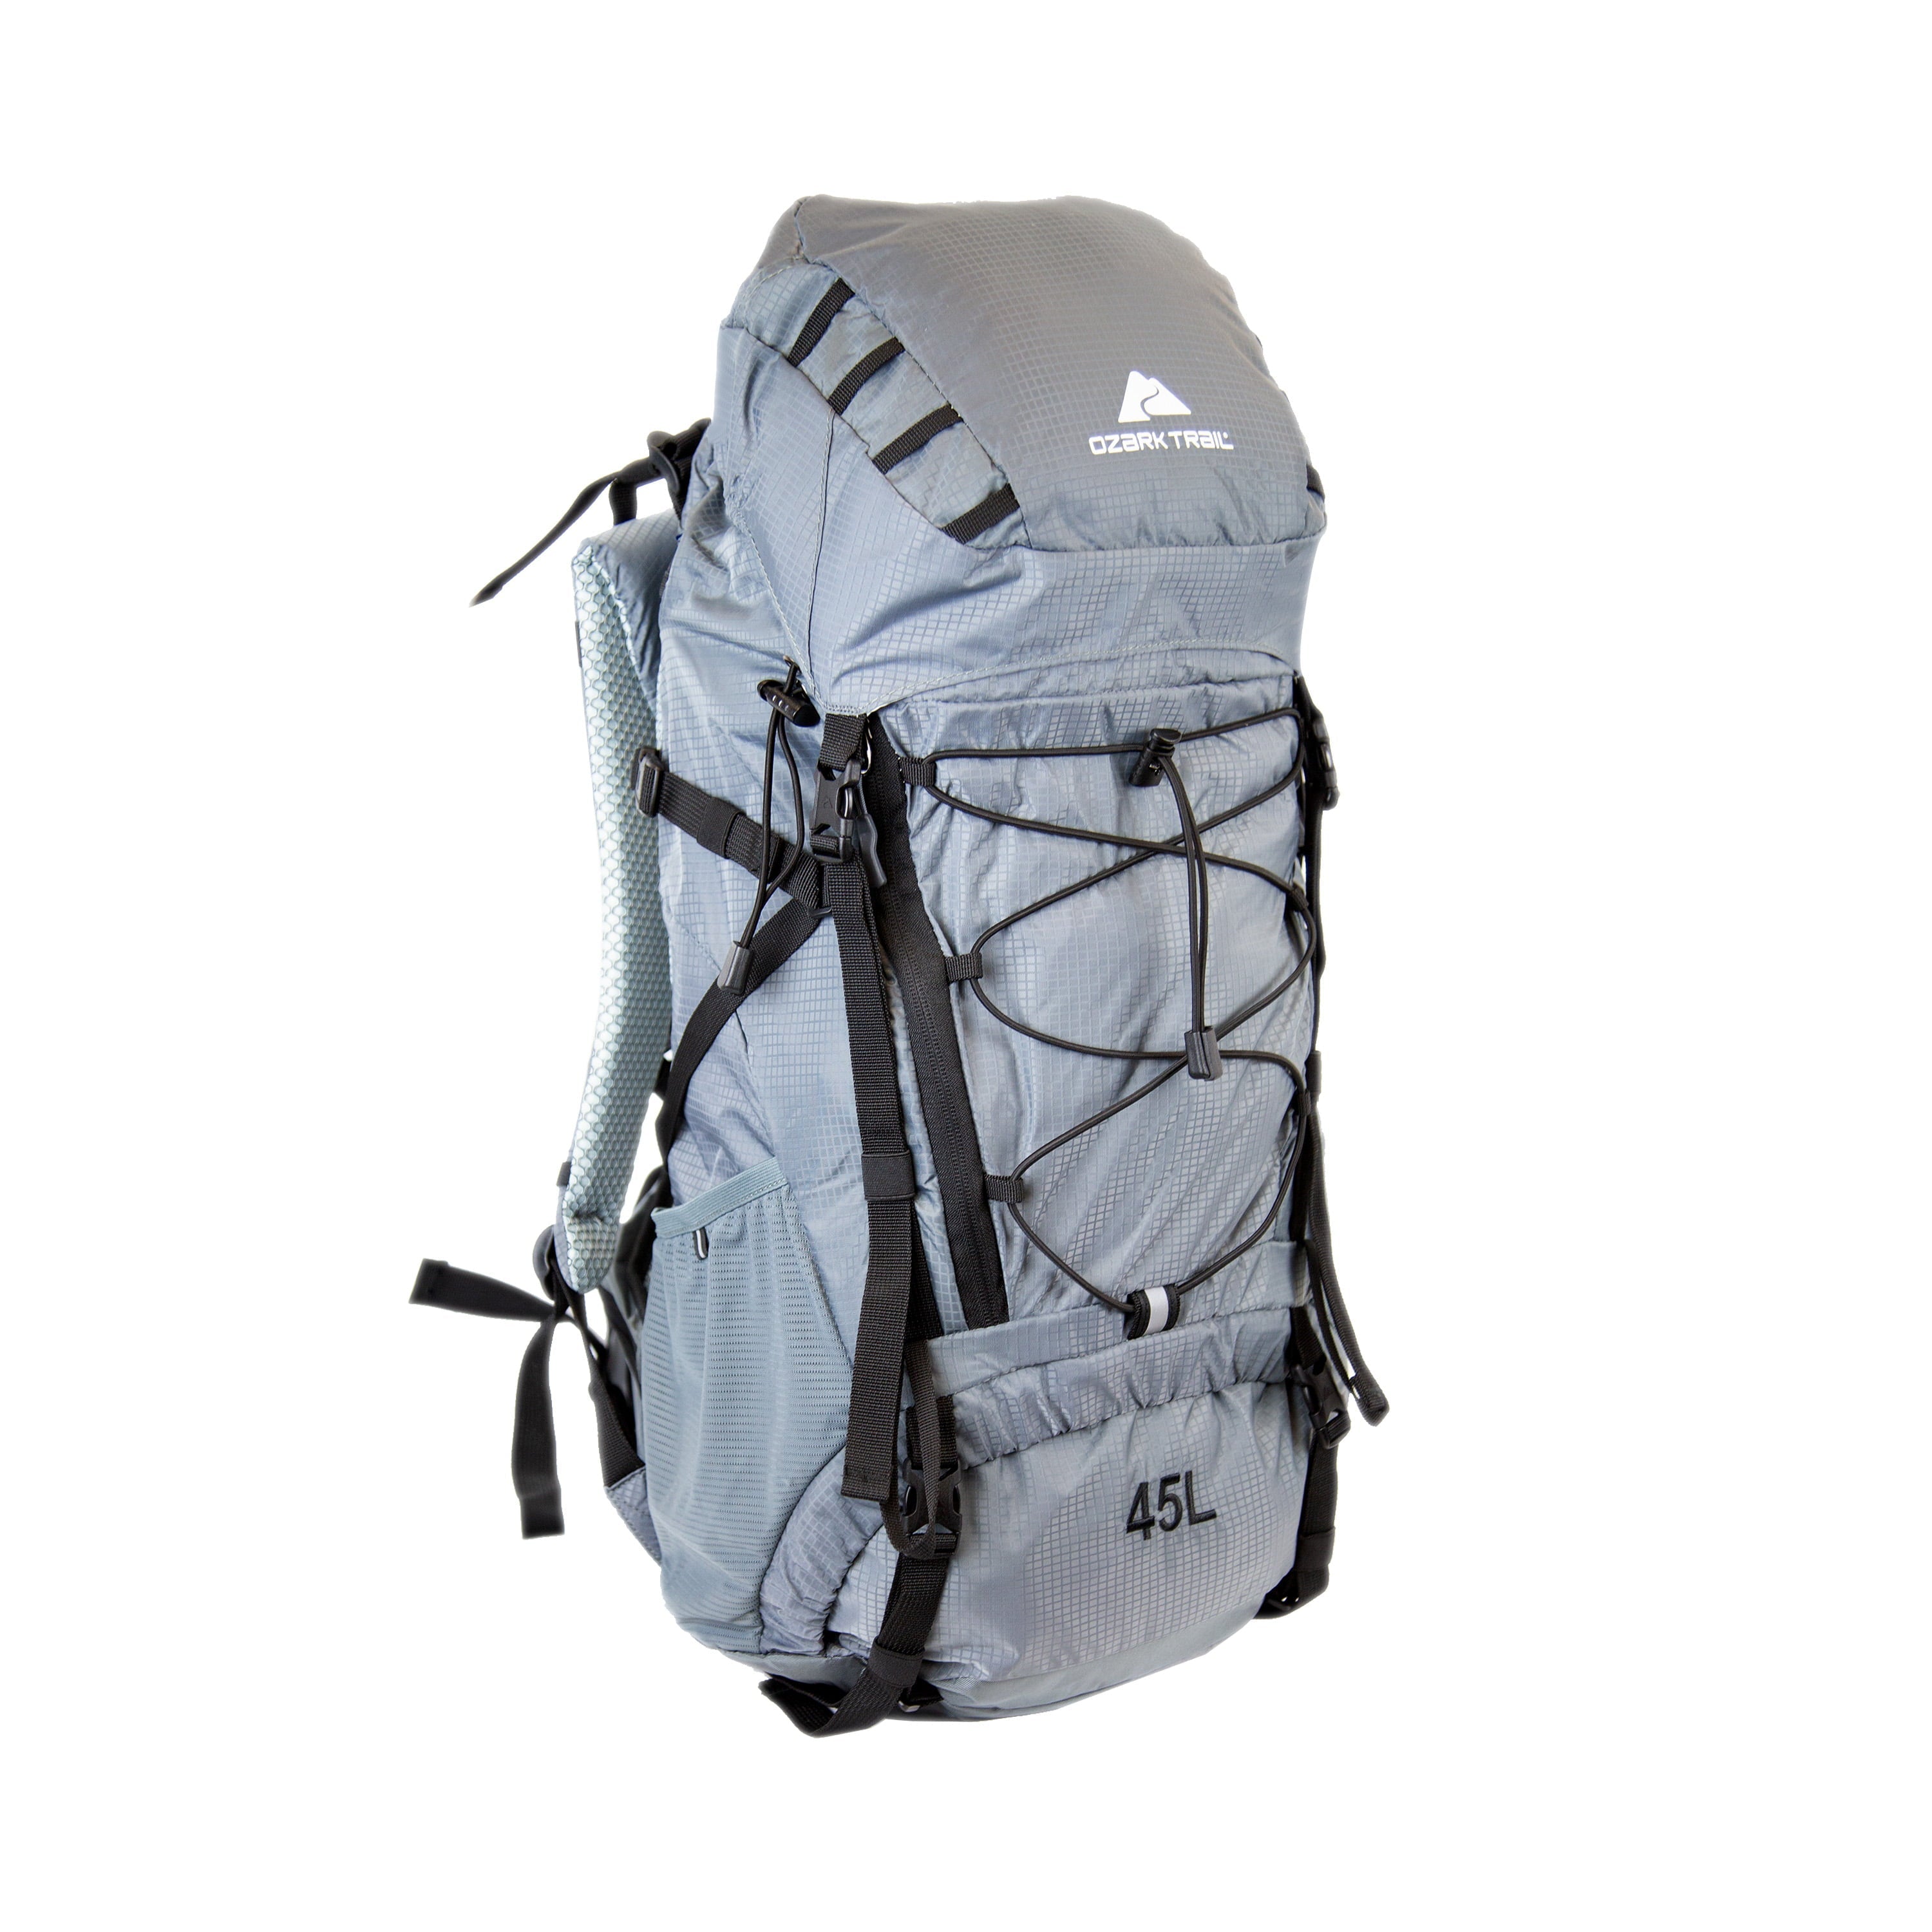 Ozark Trail 45 ltr, Backpacking Backpack, Gray